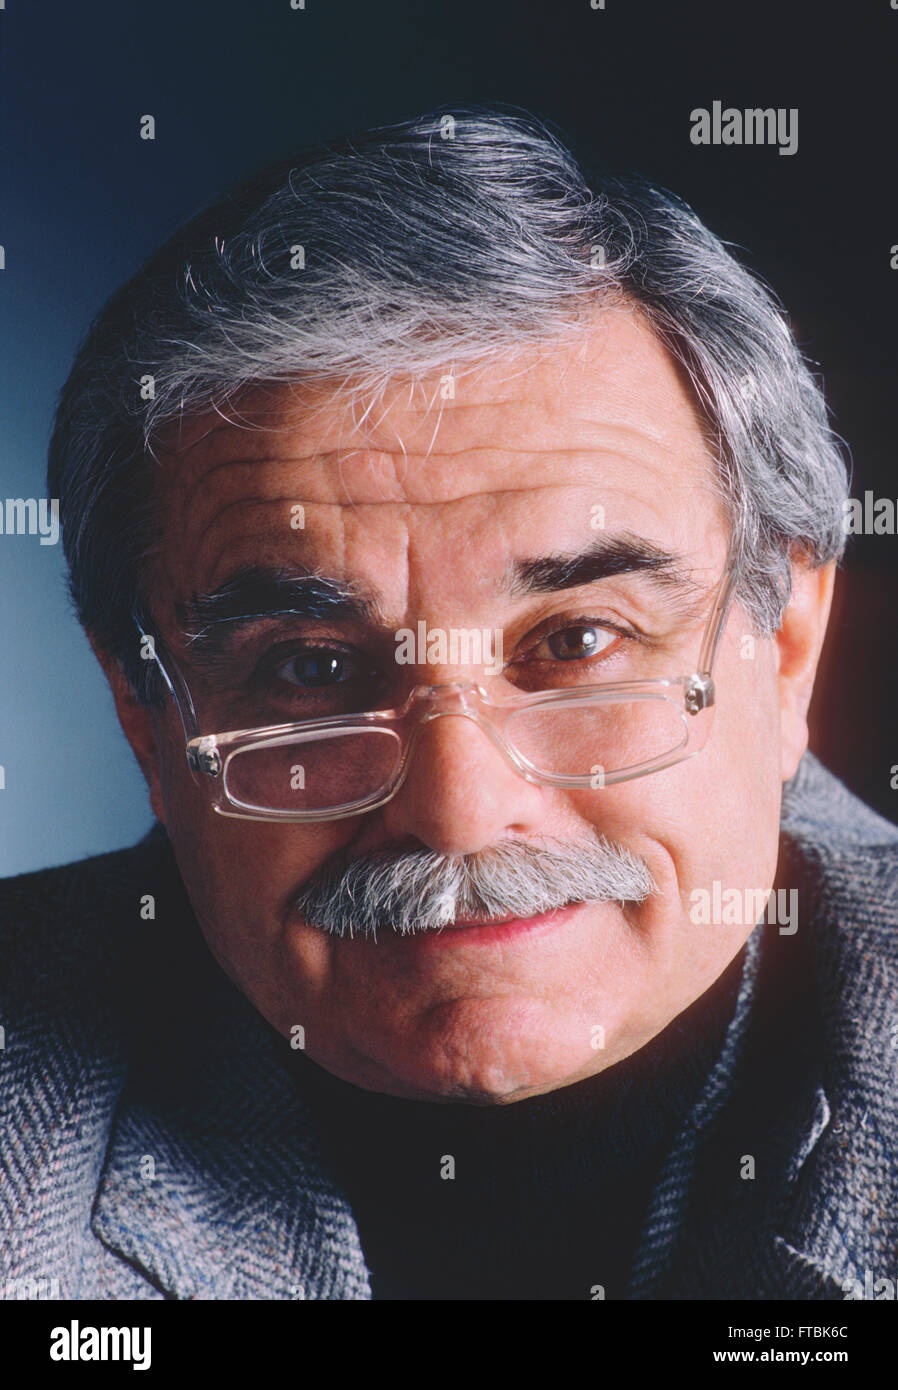 Studio portrait of distinquished older gentleman with eyeglasses, mustache & grey hair Stock Photo